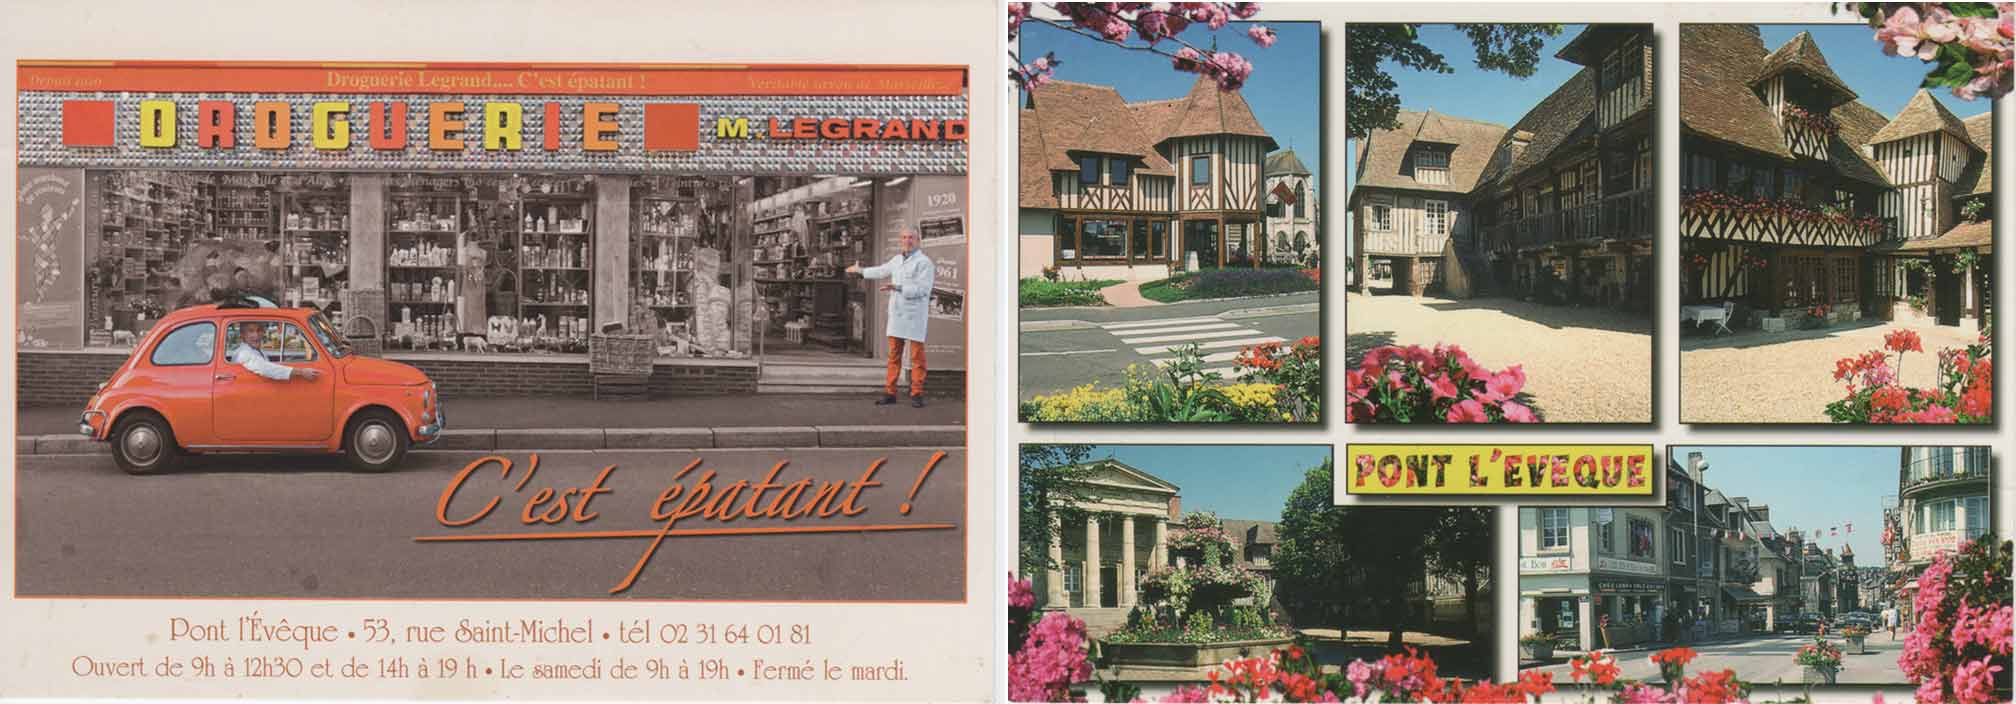  2 Pont L'Évêque post cards sent by our Chic & Slim Special Correspondent Kat. (left) Droguerie M. Legrand depuis 1920 (right) various scenes from the town